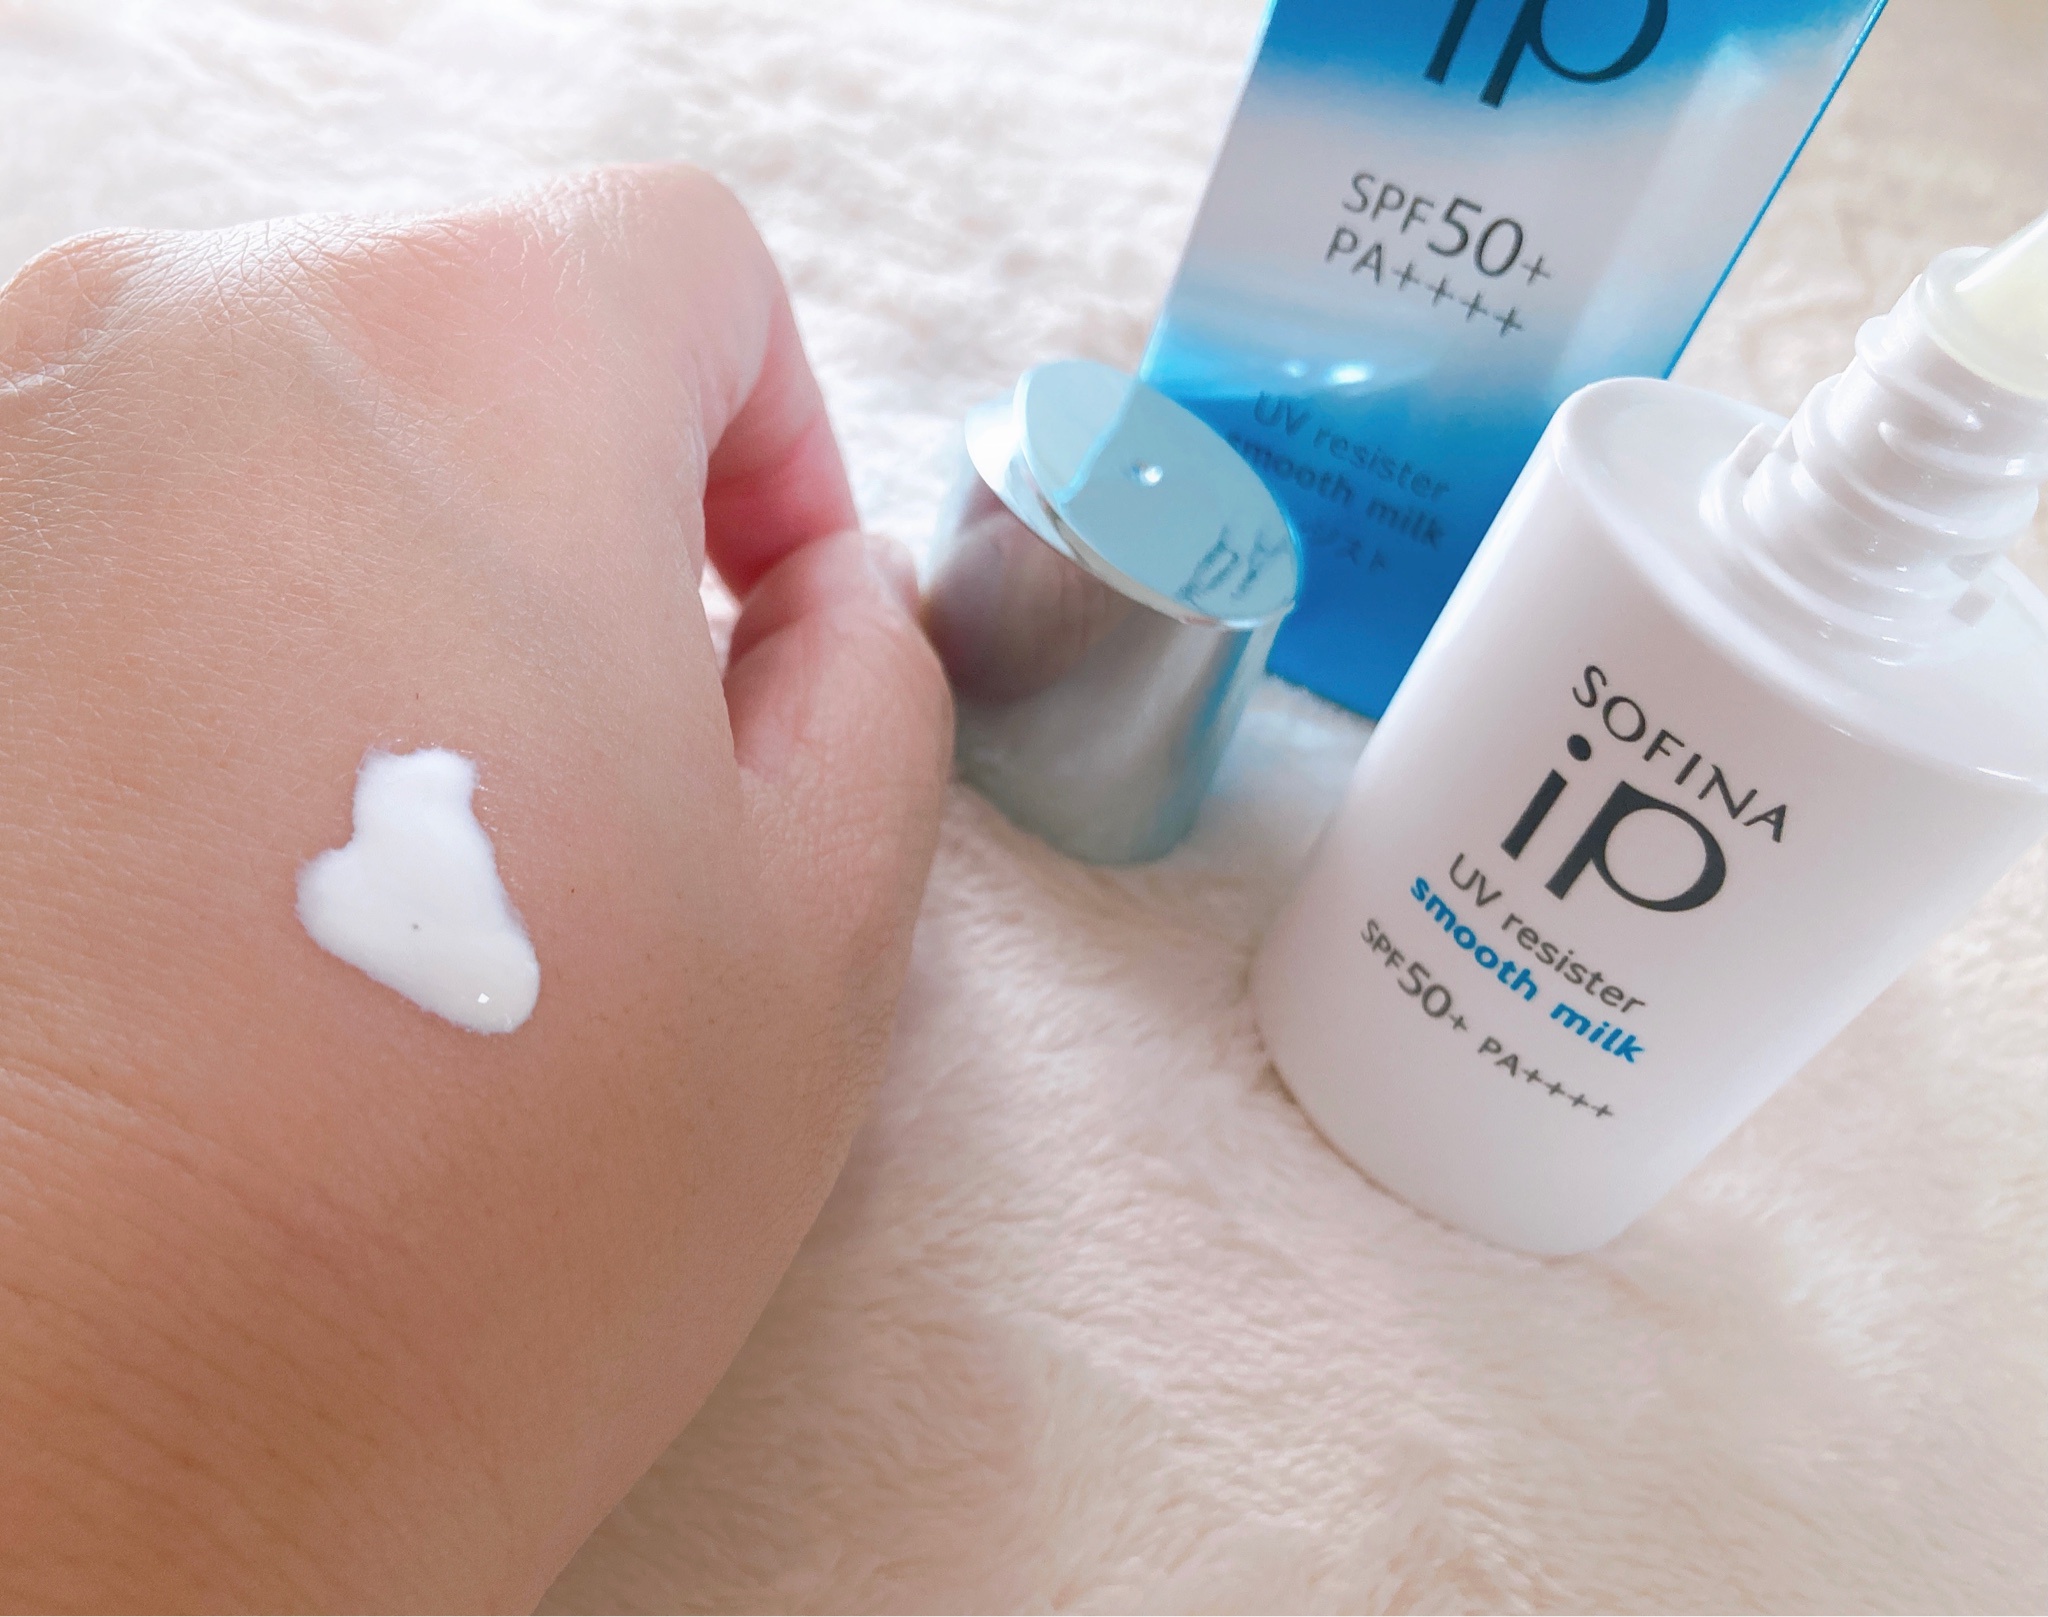 SOFINA iP / UVレジスト スムースミルクの公式商品情報｜美容・化粧品